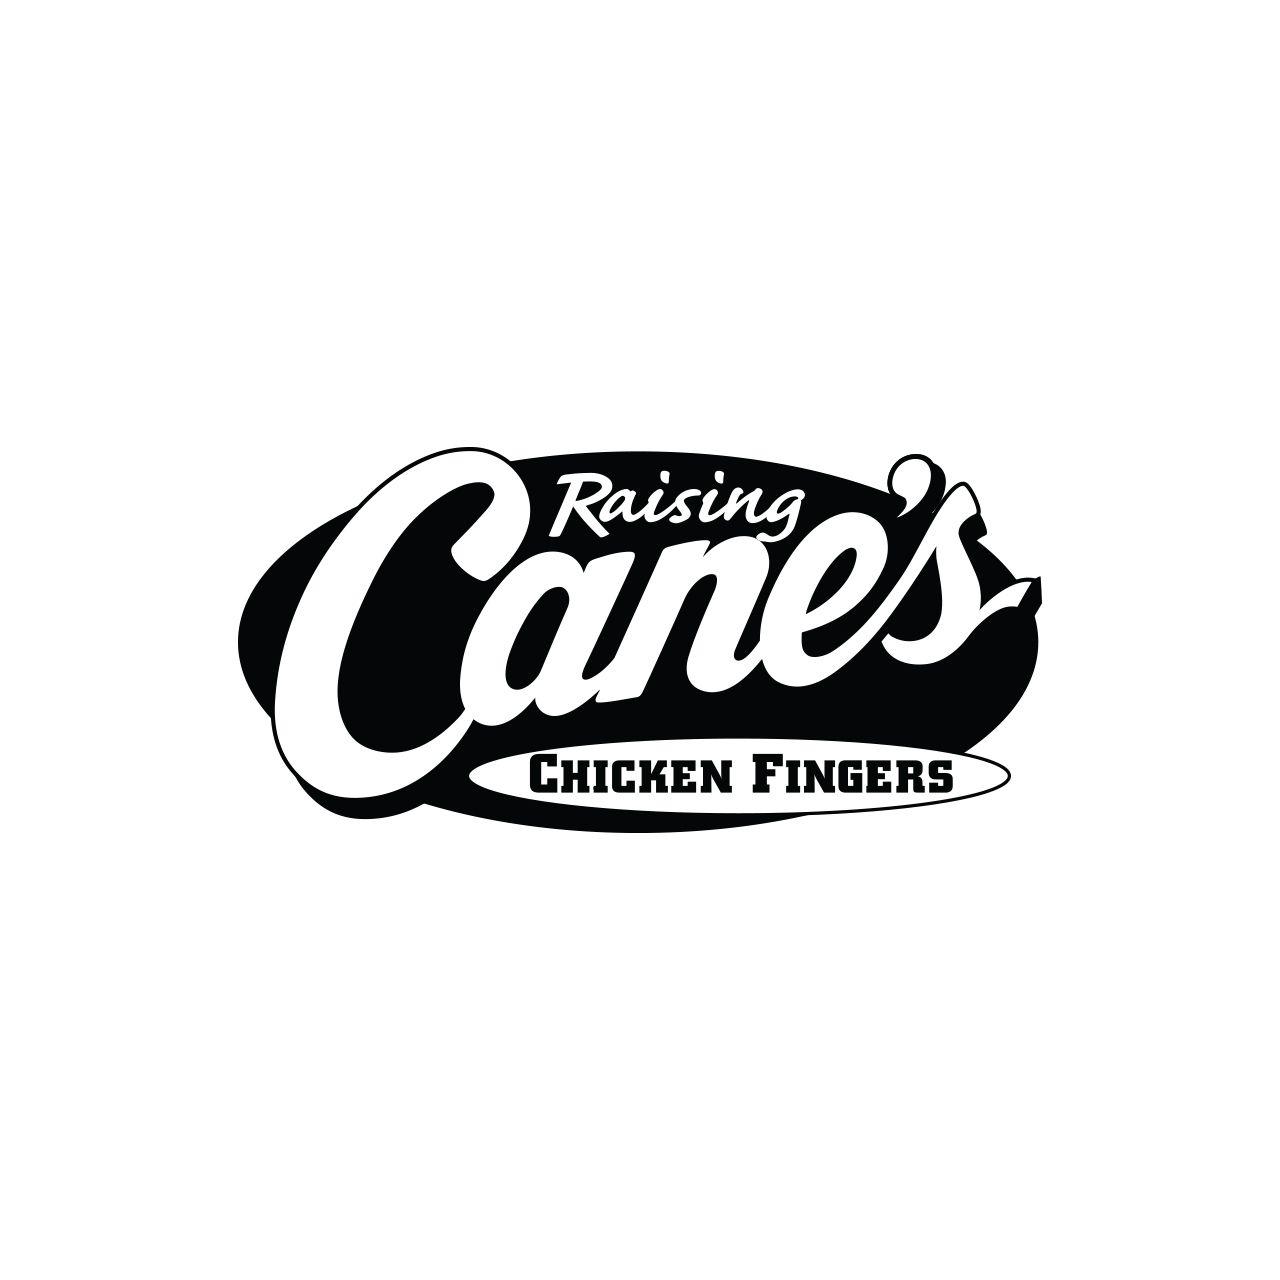 Canes Logo - Raising Cane's Chicken Fingers